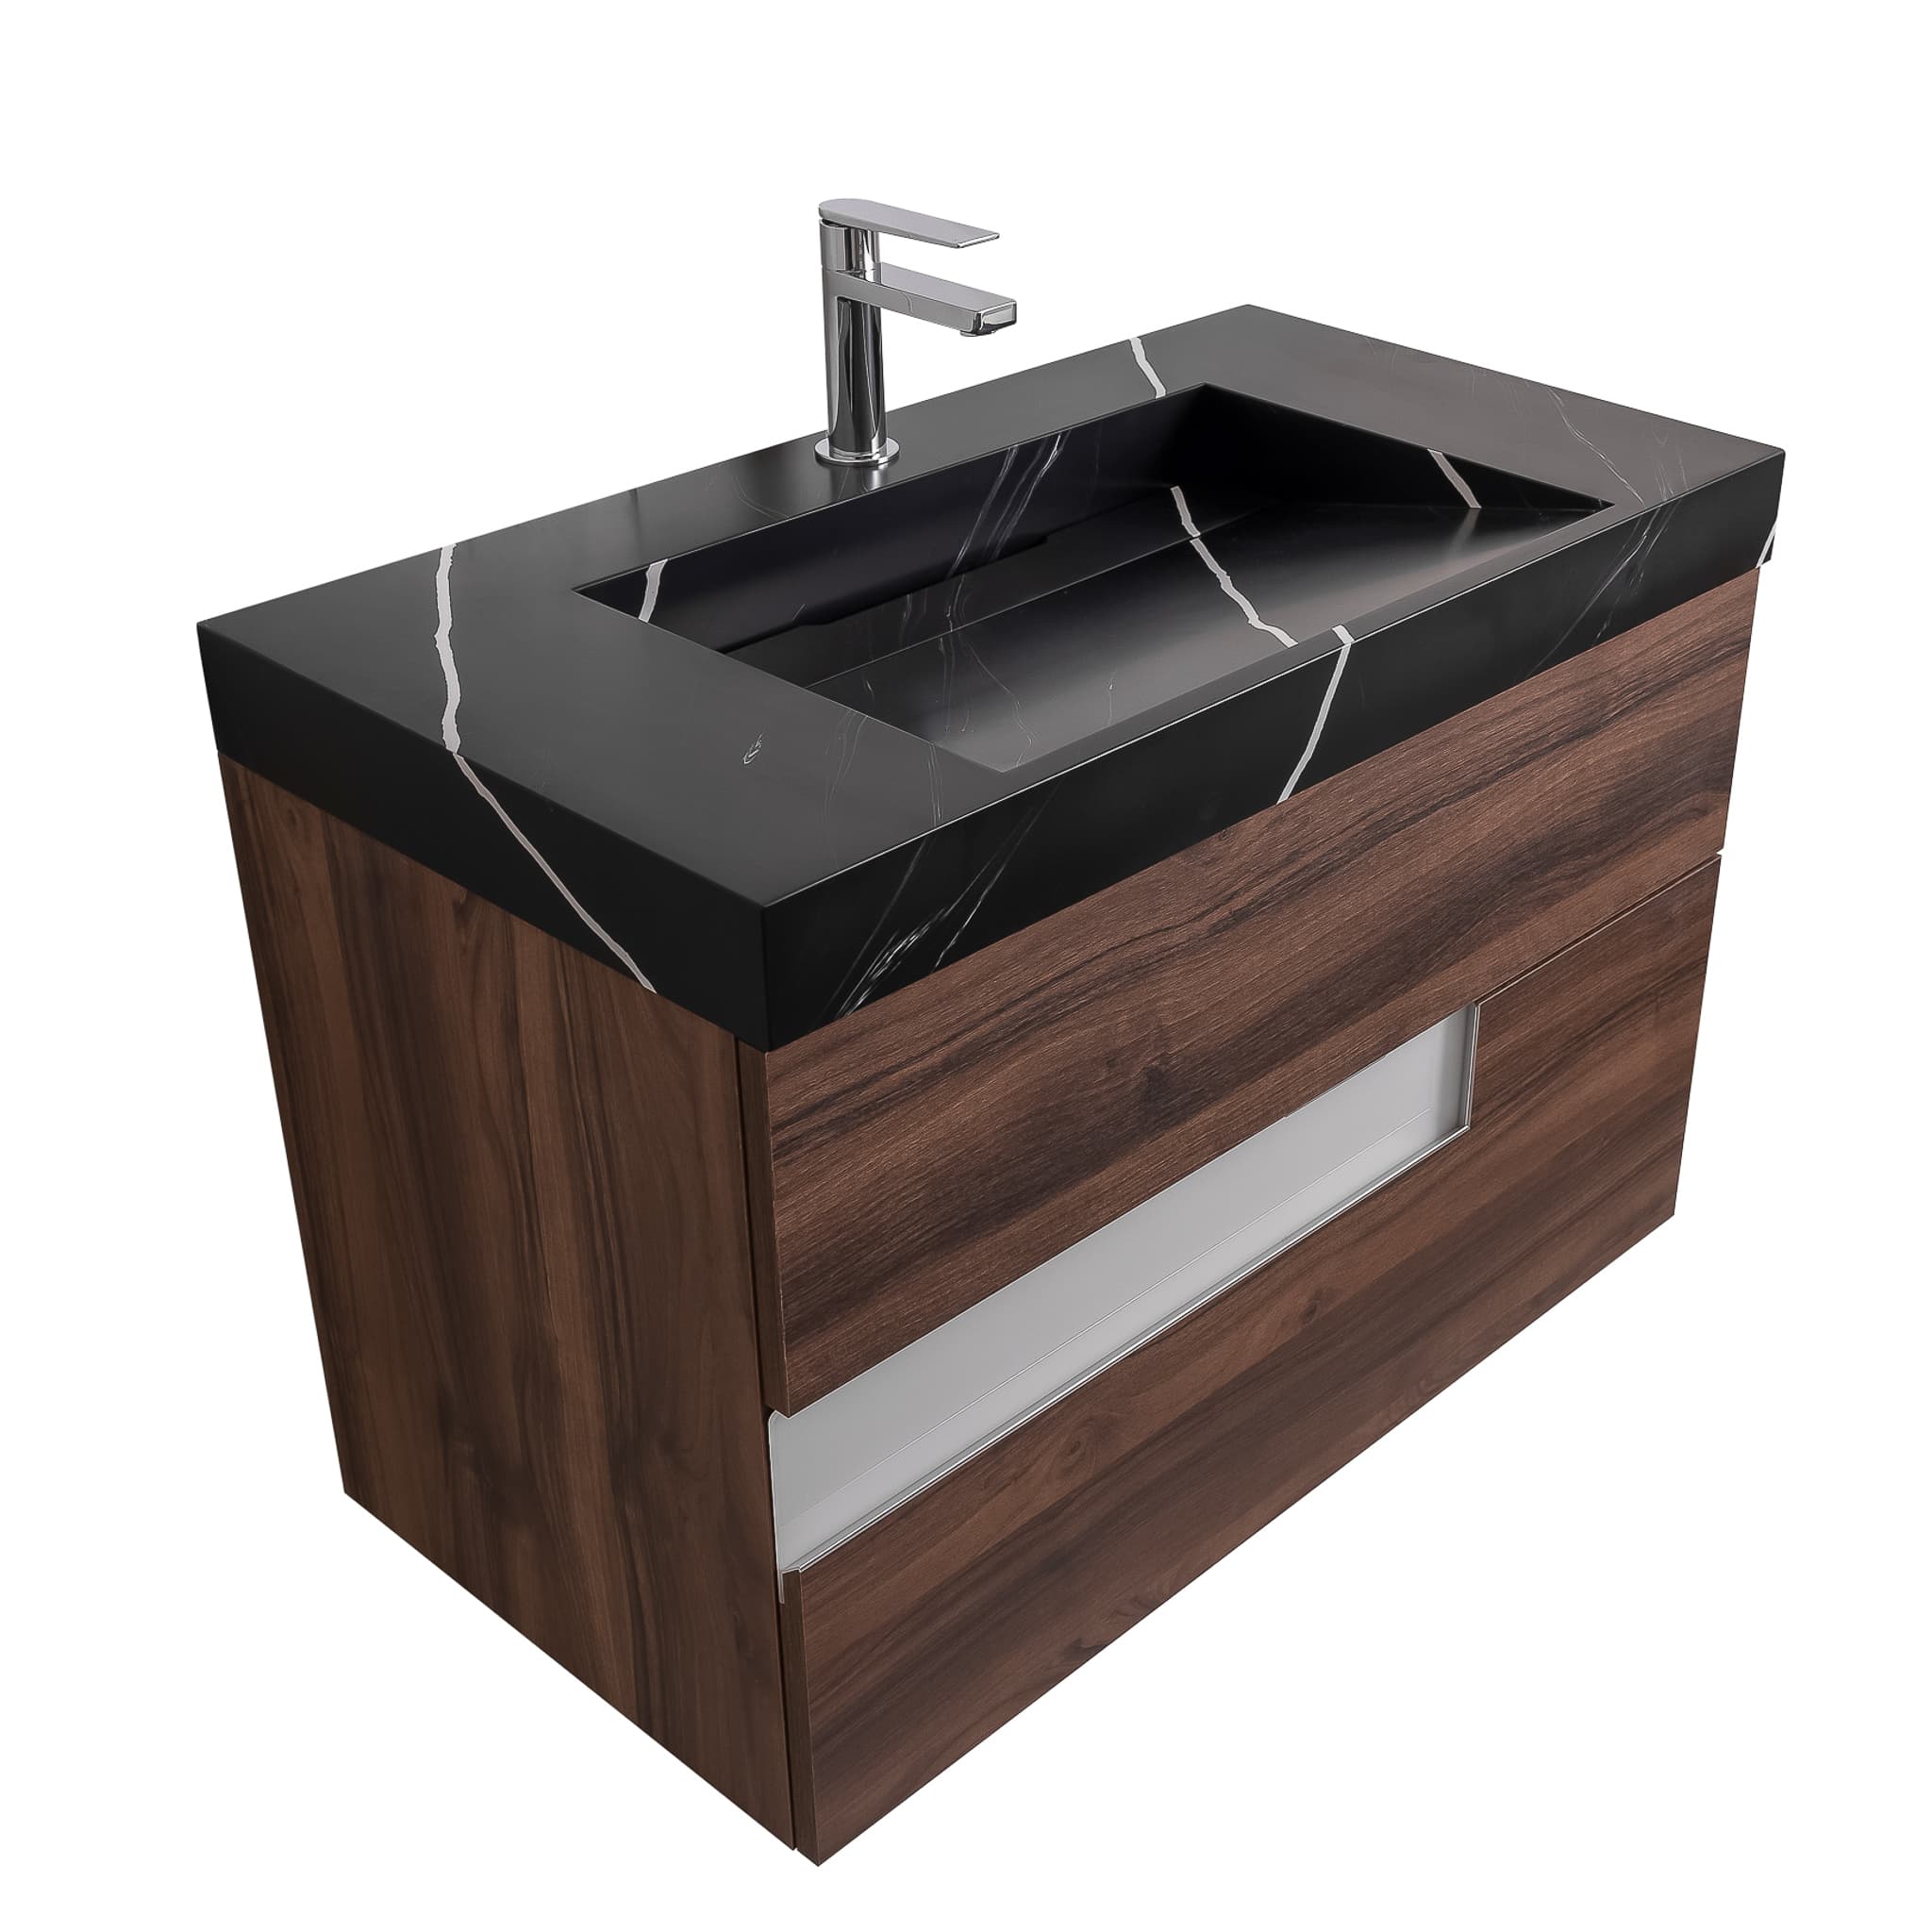 Vision 39.5 Valenti Medium Brown Wood Cabinet, Solid Surface Matte Black Carrara Infinity Sink, Wall Mounted Modern Vanity Set